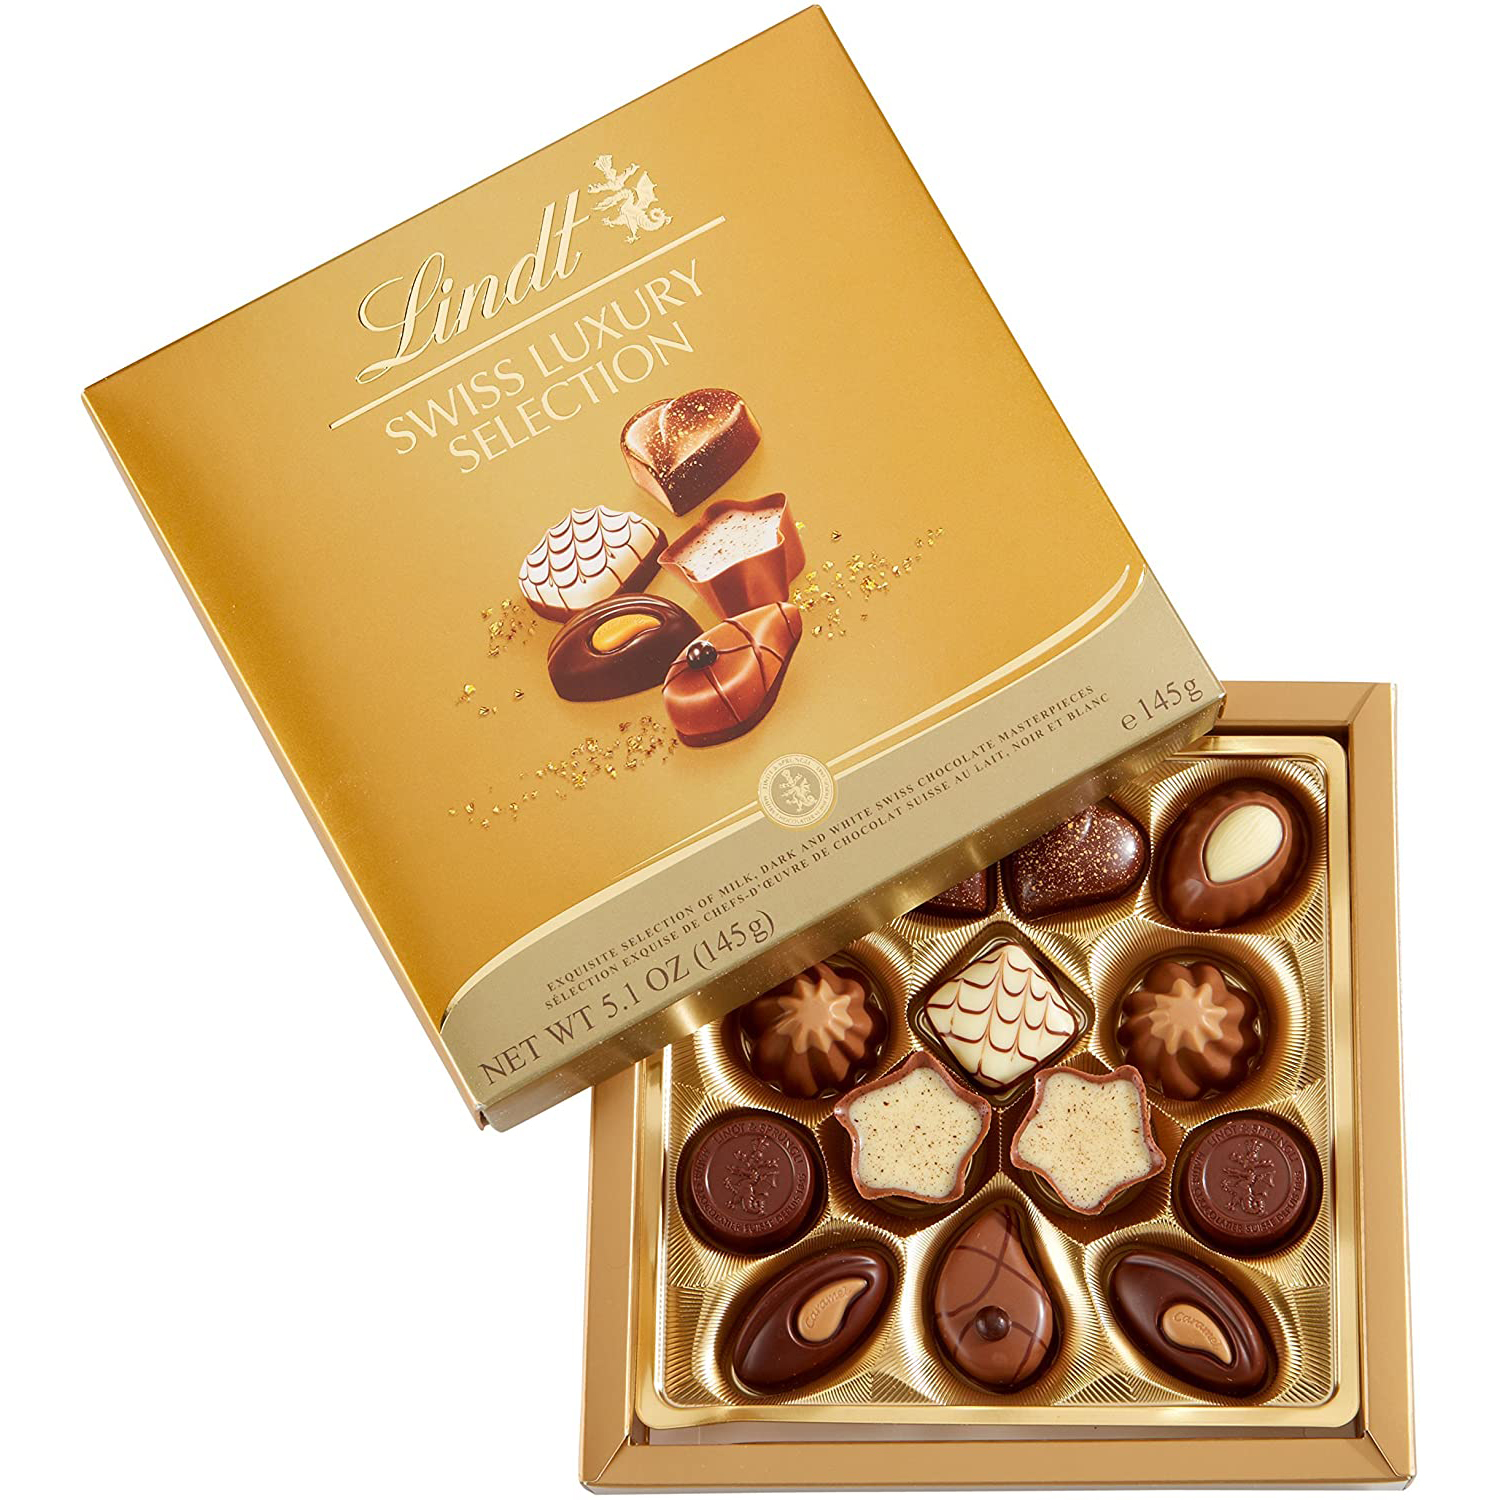 Secondery Lindt Swiss Luxury Selection Chocolate Box 145g.jpg